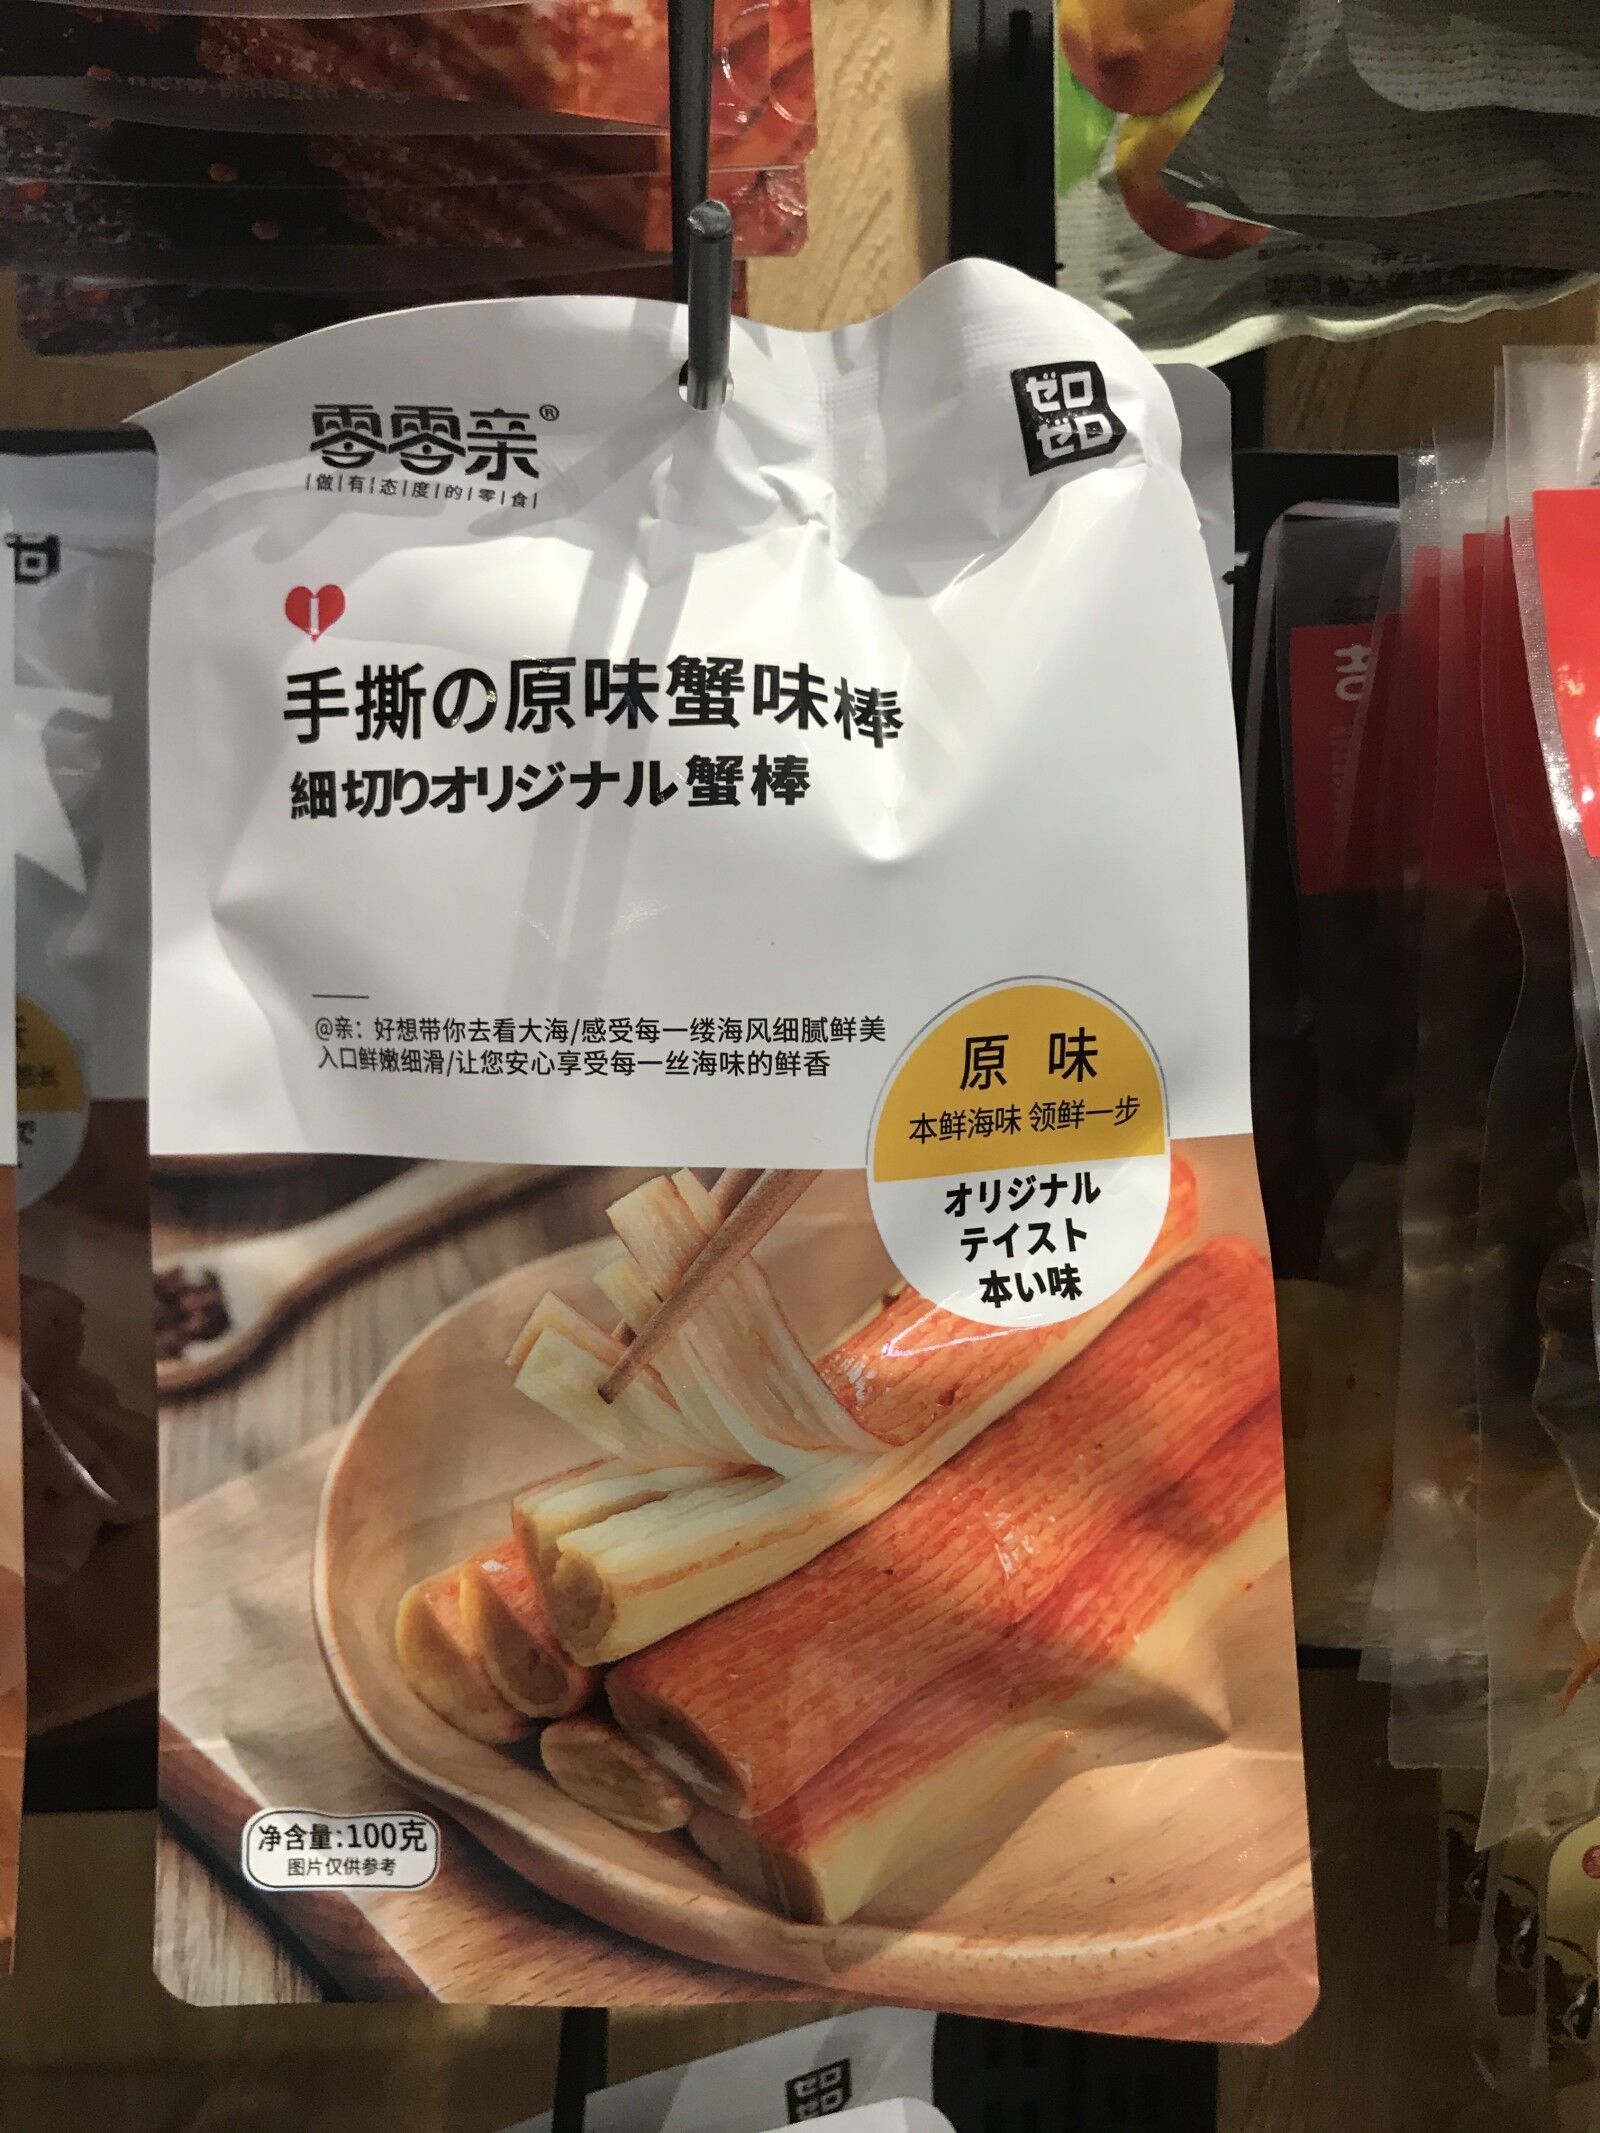 023 meats: Crab stick